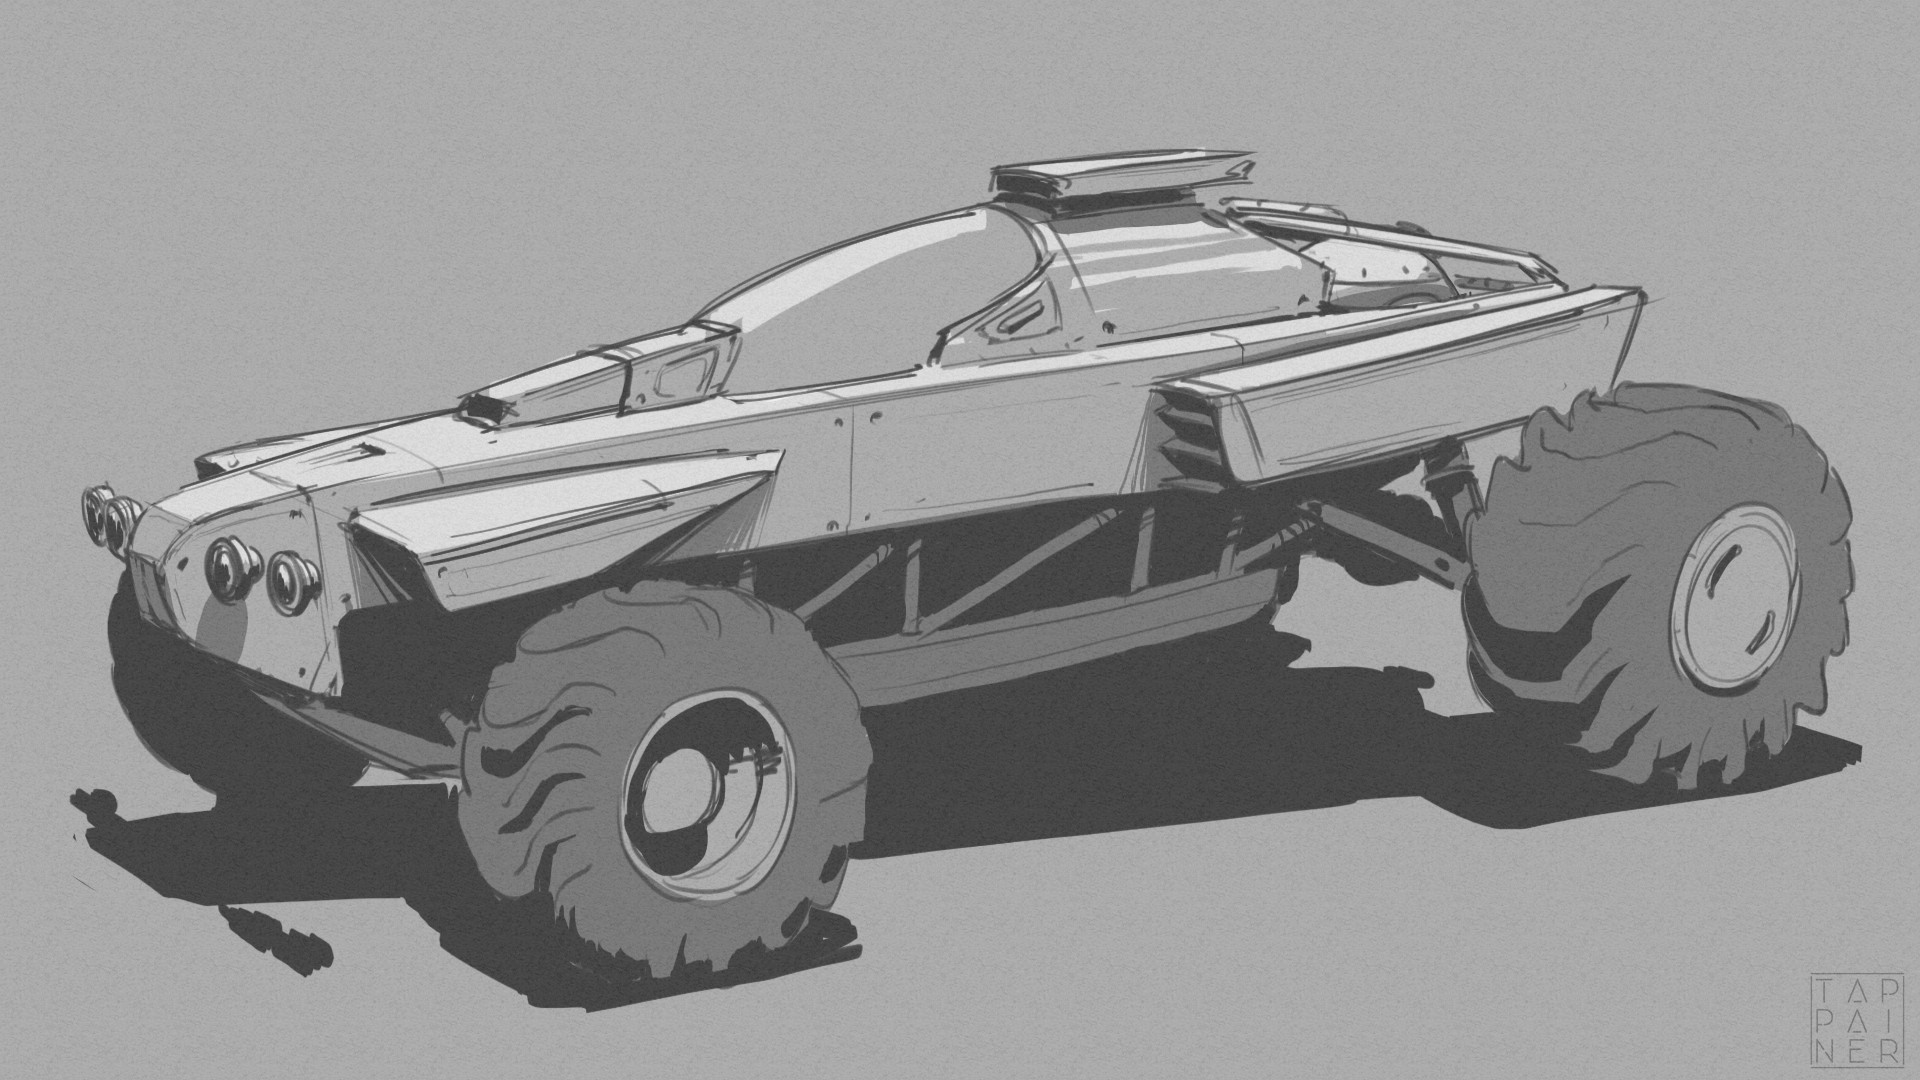 dune buggy design